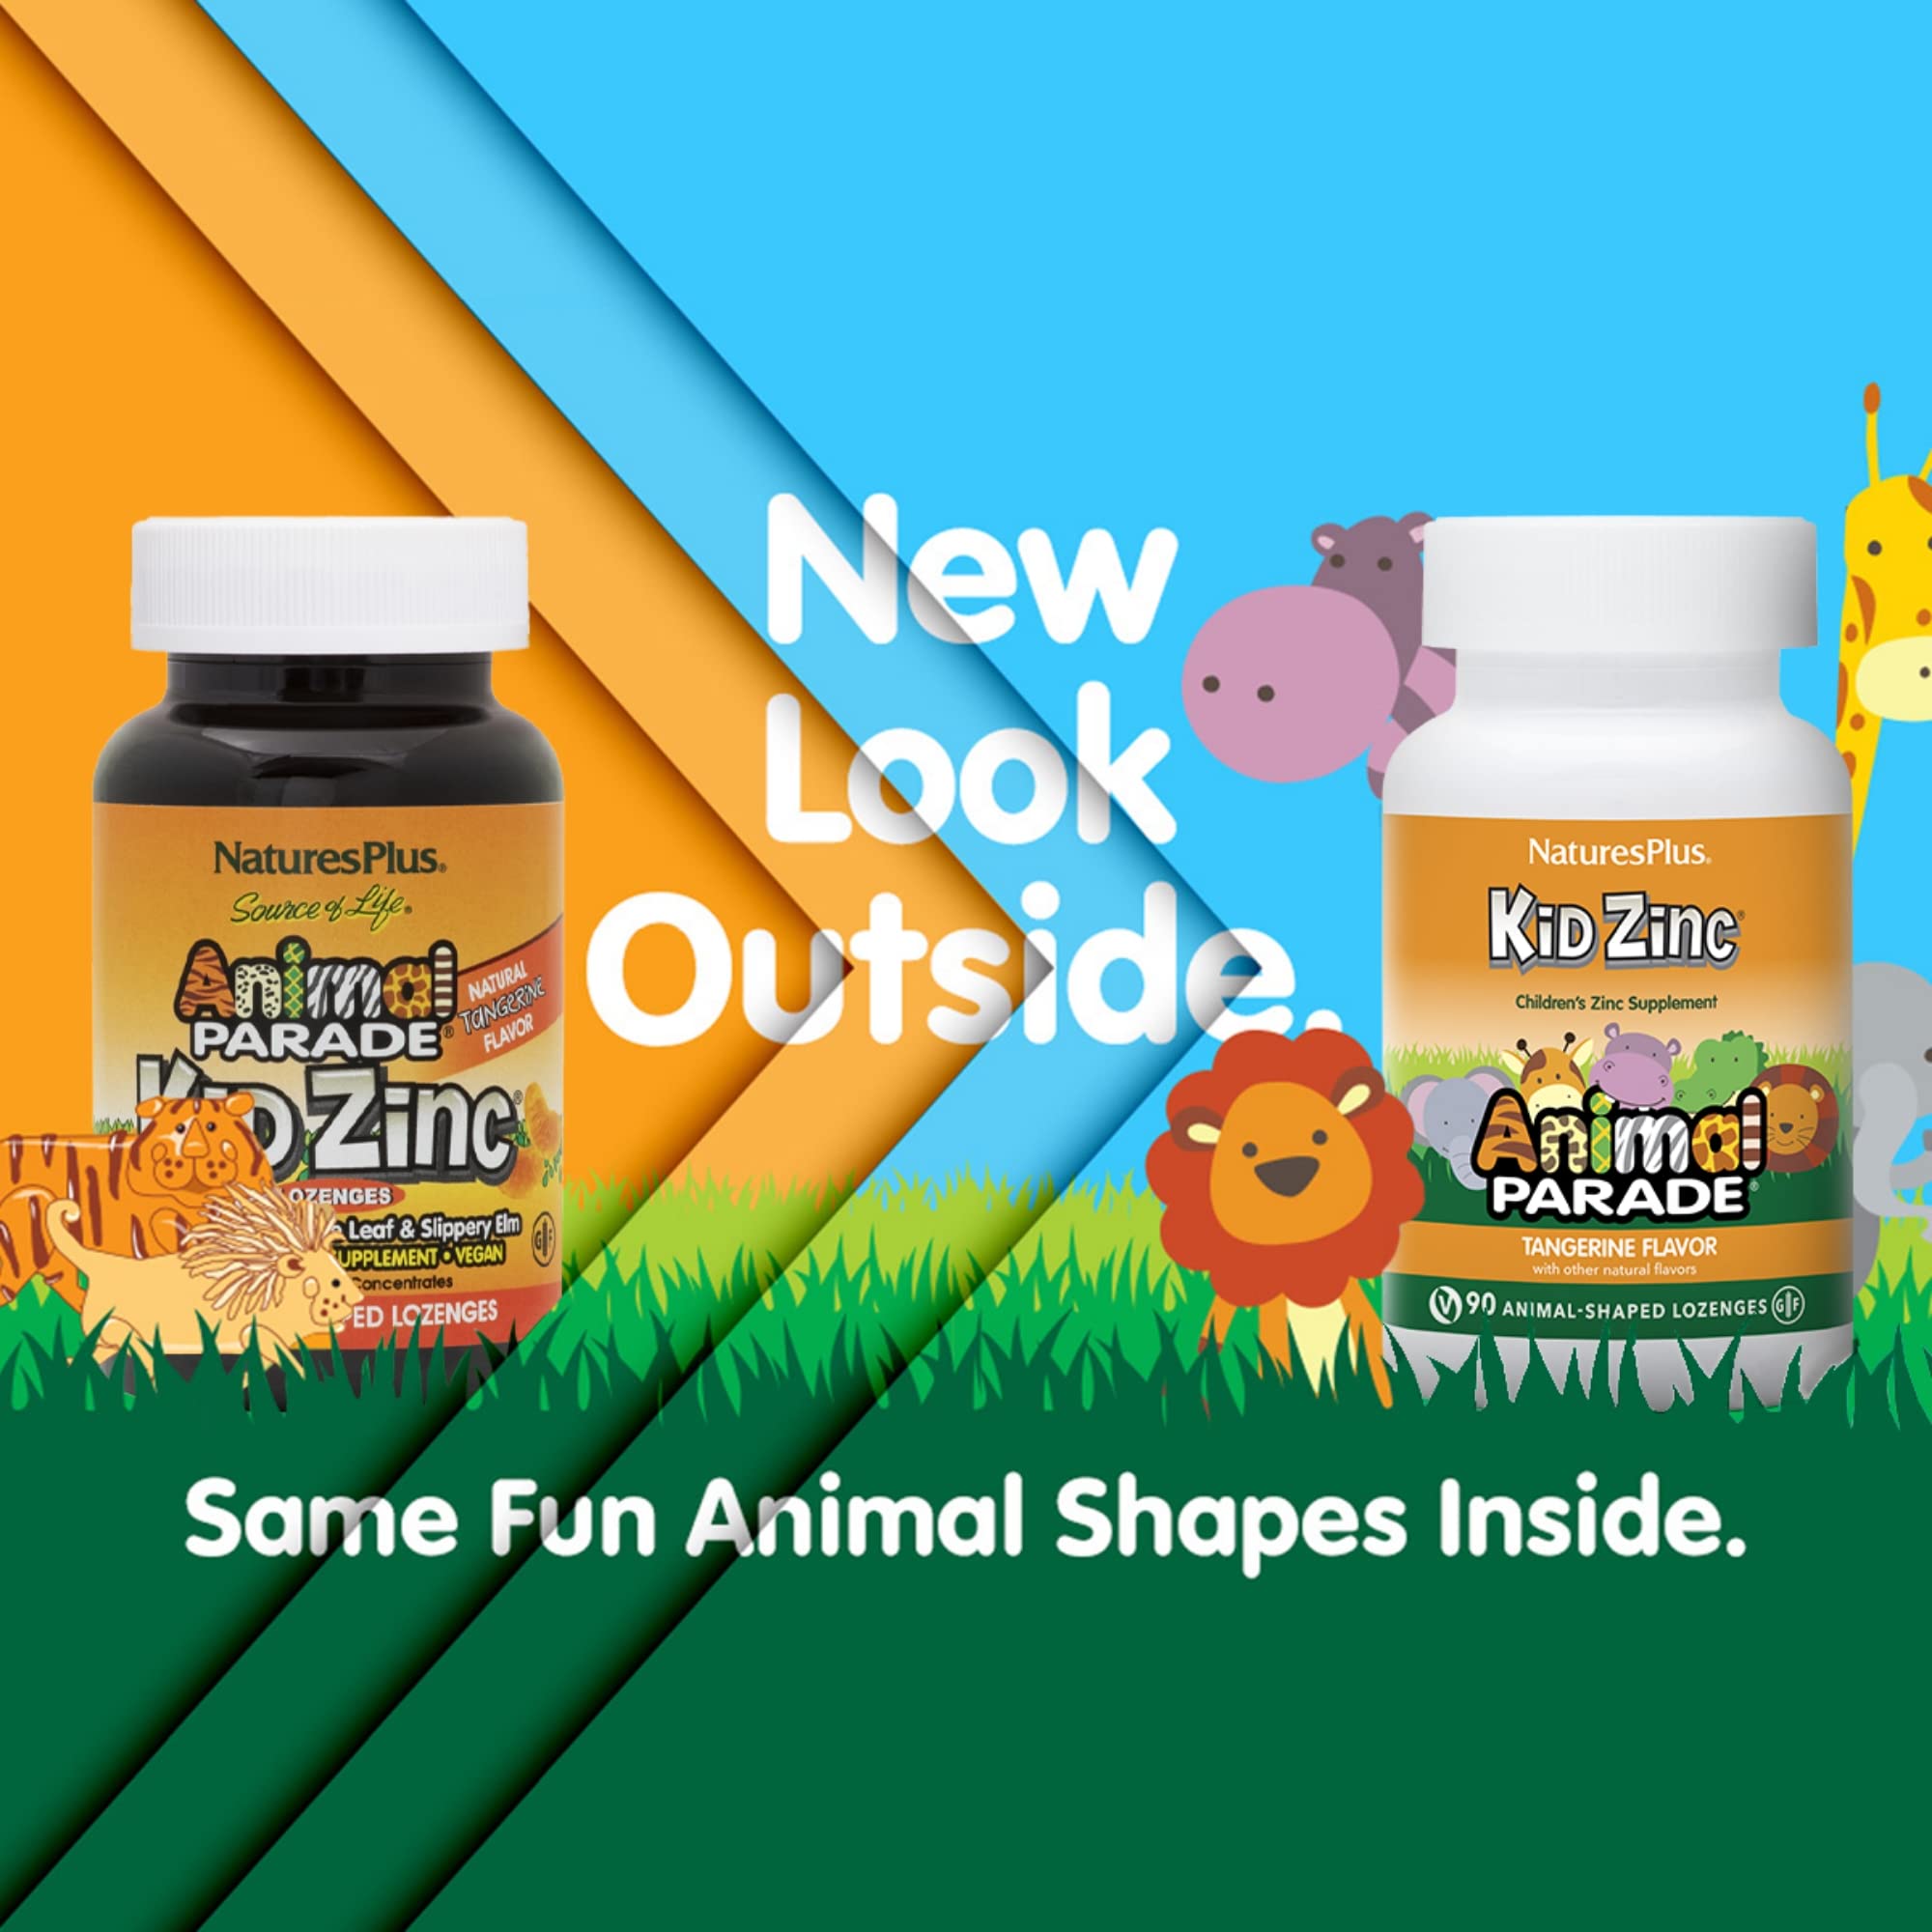 NaturesPlus Animal Parade KidZinc, Tangerine Flavor - 90 Animal-Shaped Lozenges, Pack of 3 - Organically Chelated Zinc - Vegan, Gluten Free - 270 Total Servings